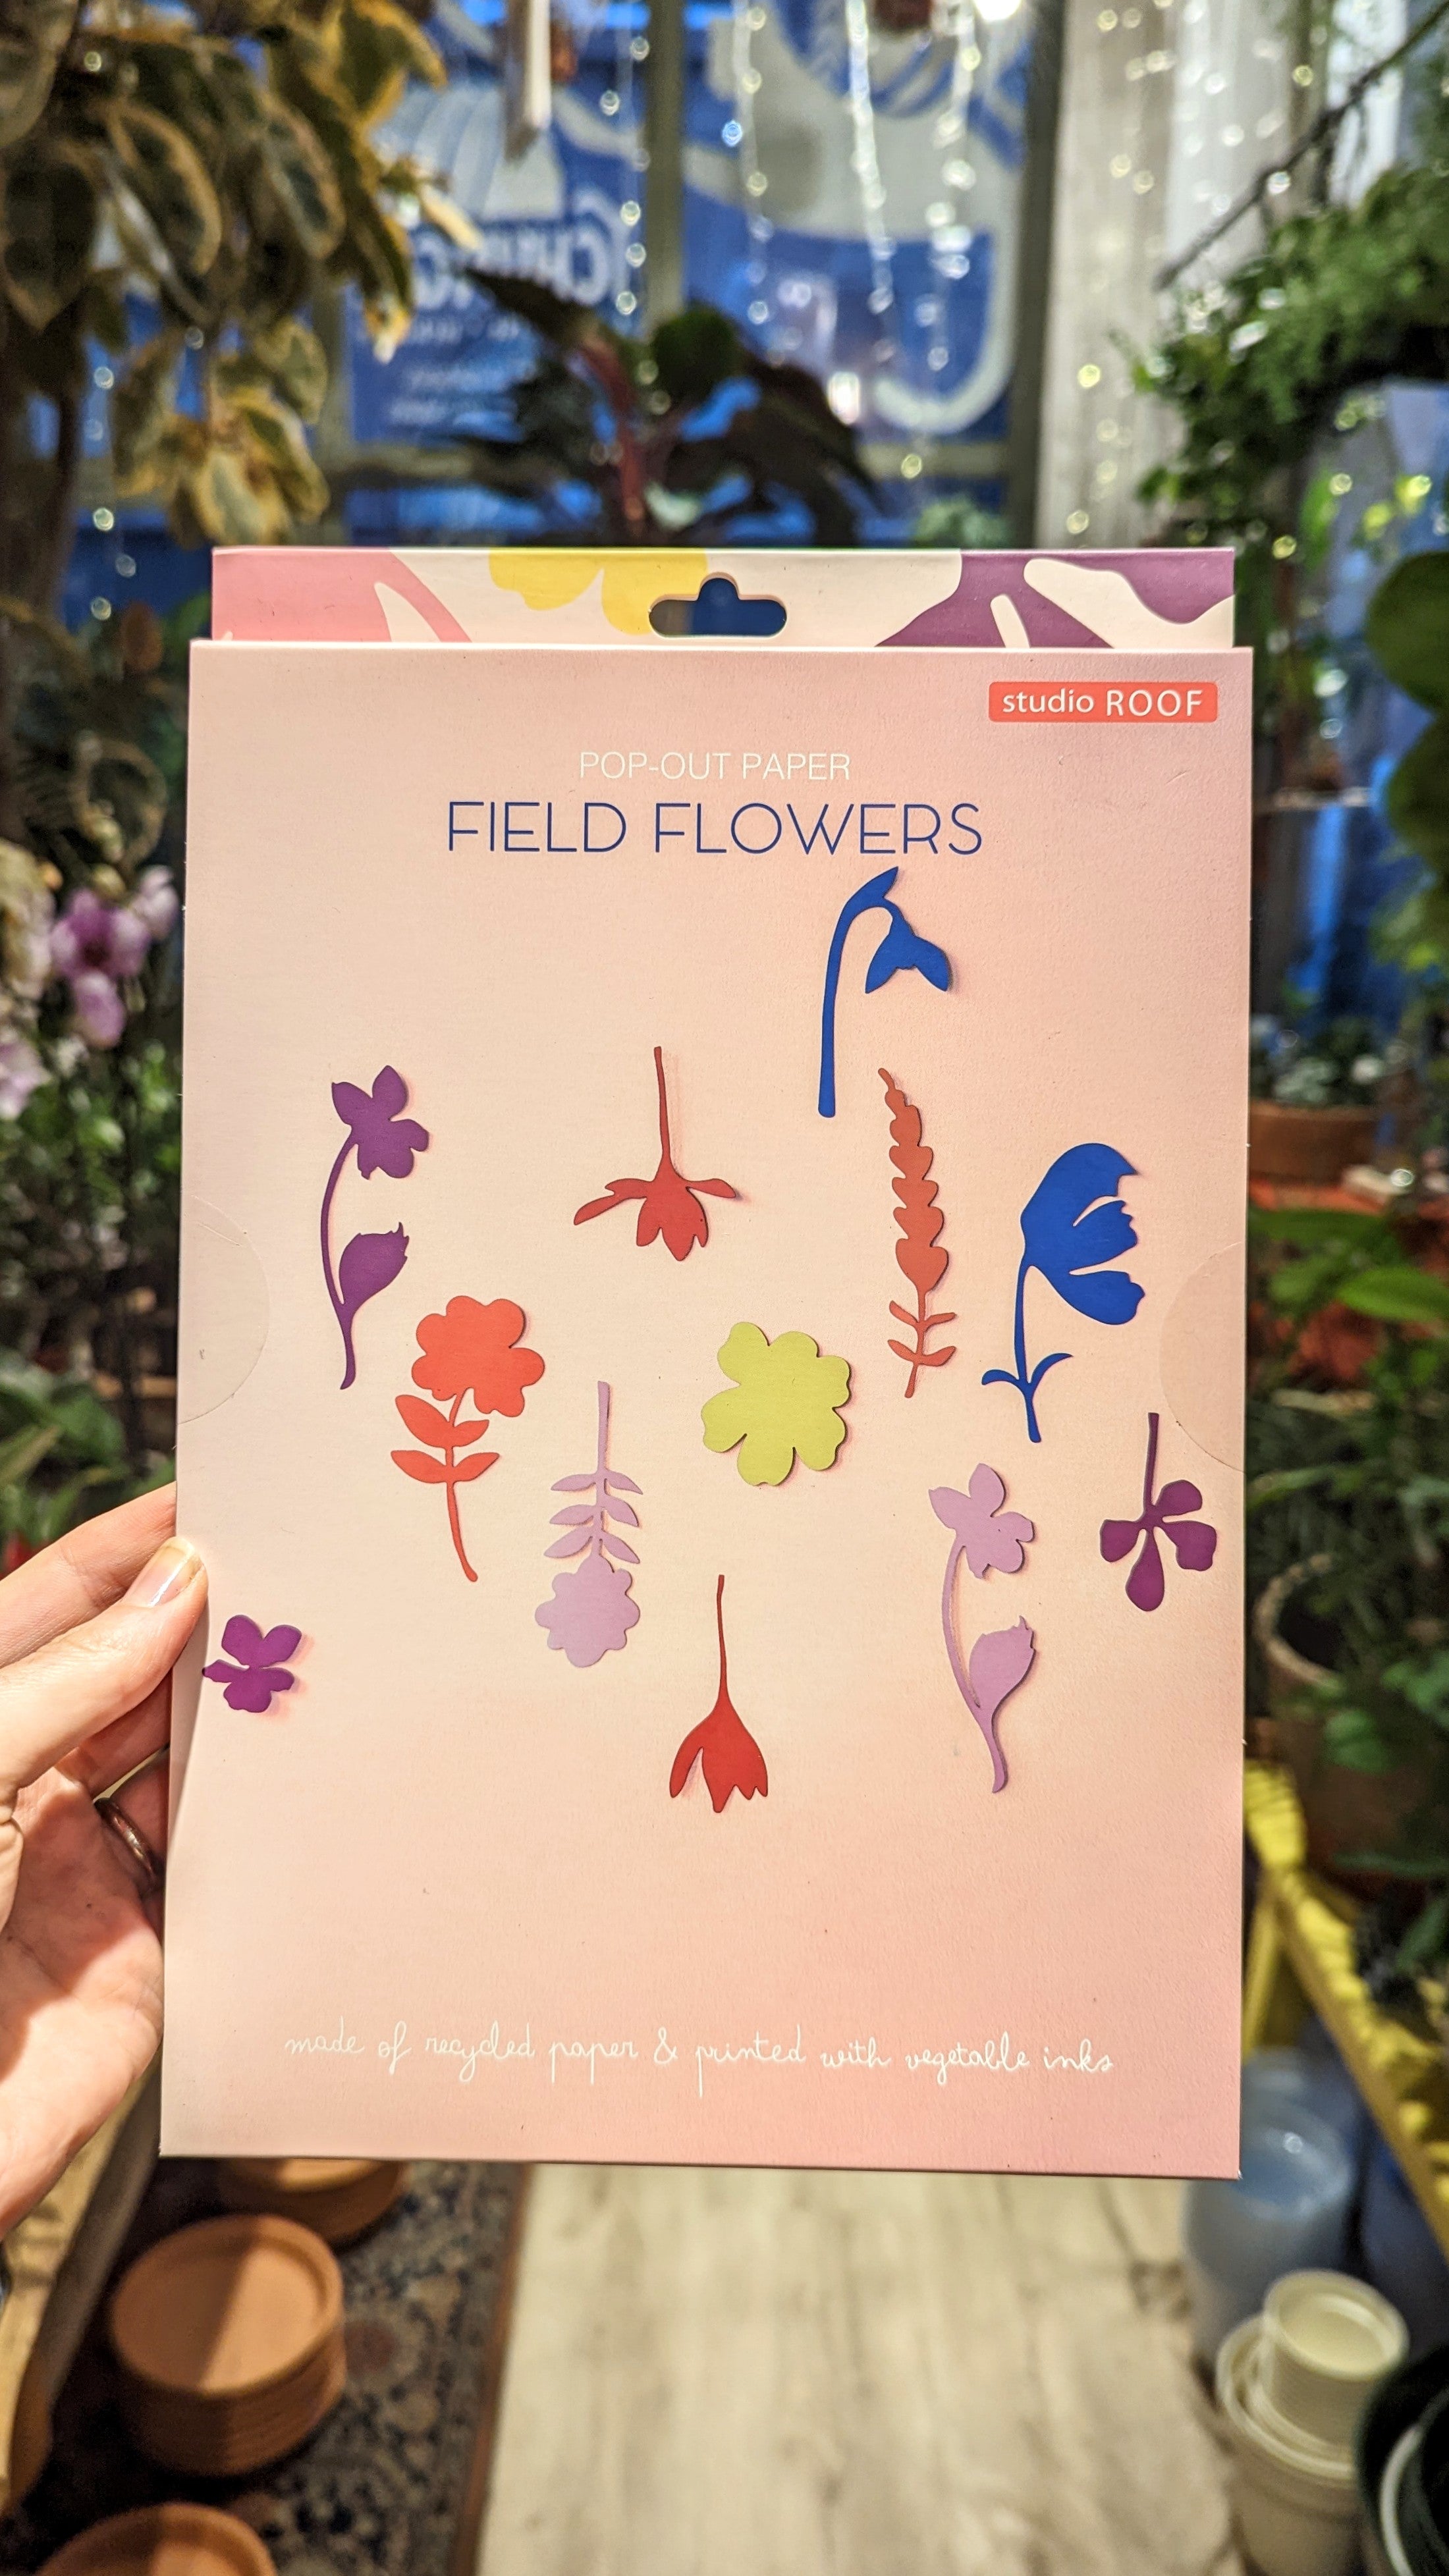 Studio ROOF | The world of wild flowers (Field flowers)